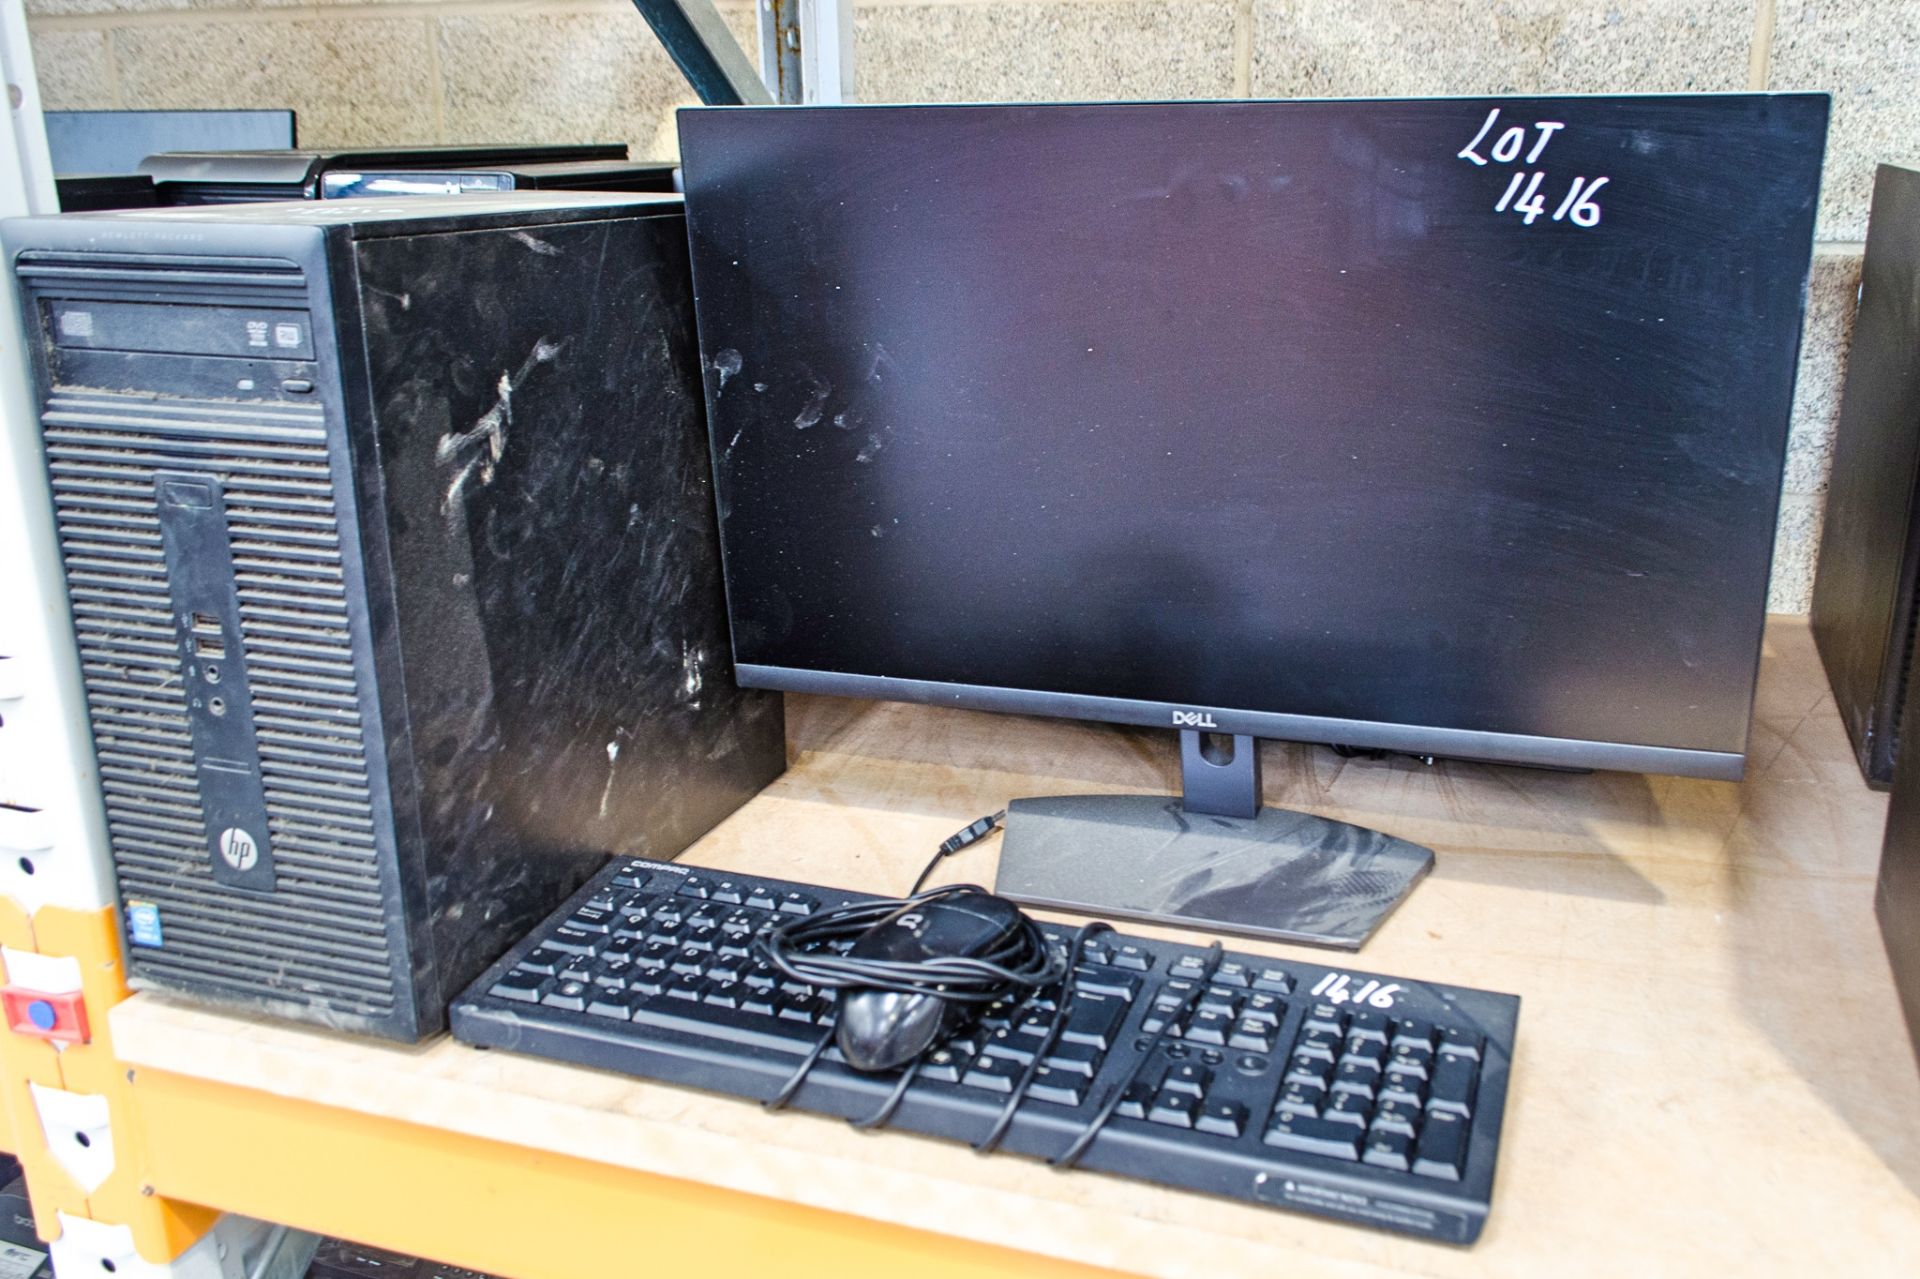 Hewlett Packard desktop computer c/w flat screen monitor, keyboard and mouse ** Hard drive